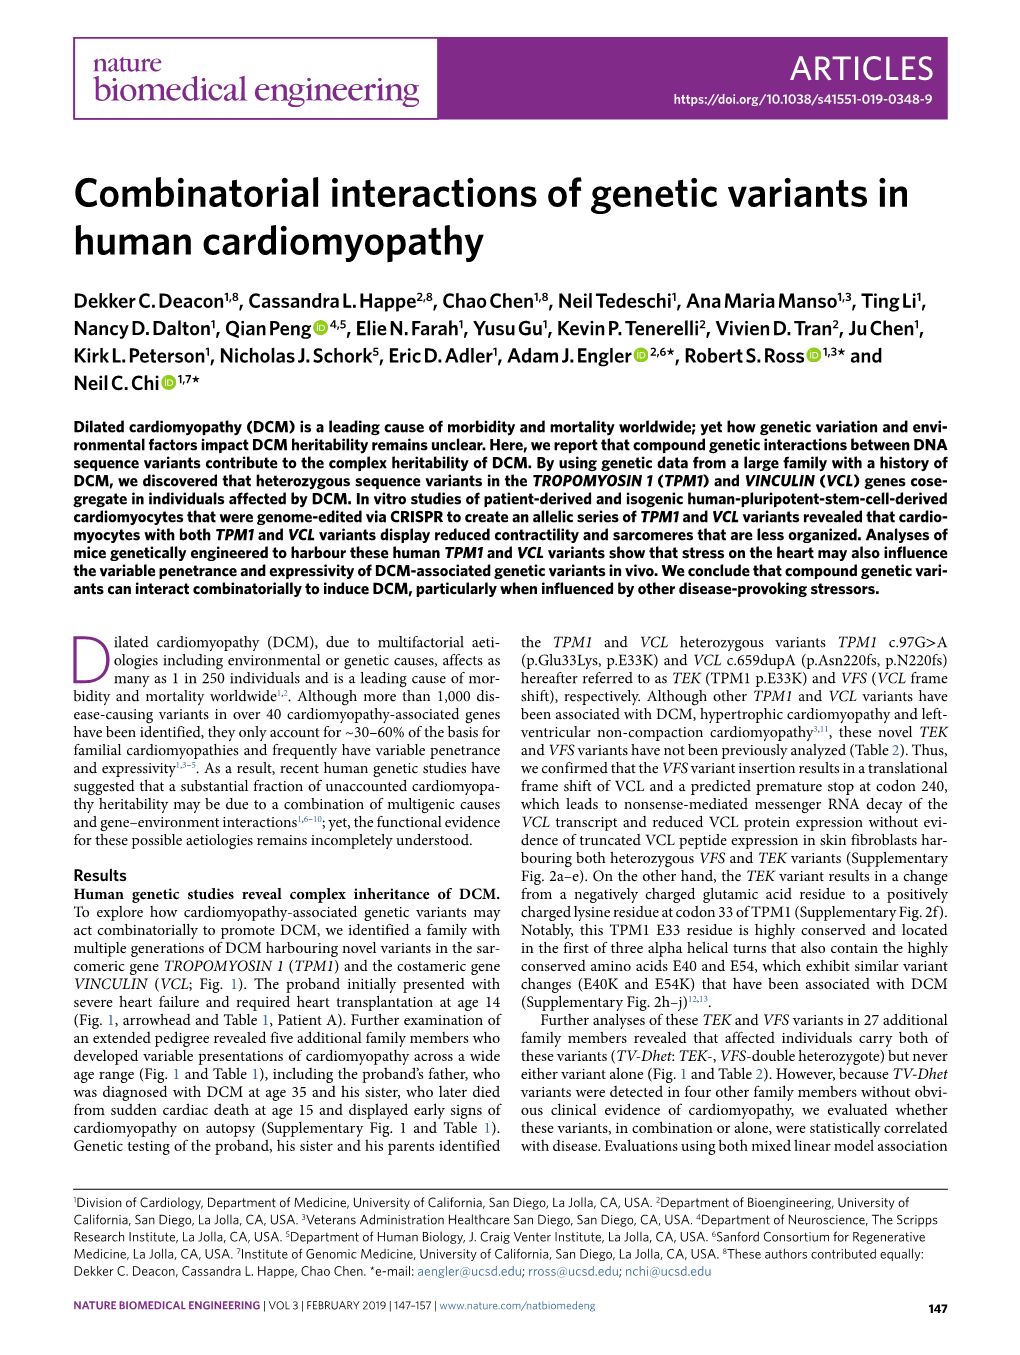 Combinatorial Interactions of Genetic Variants in Human Cardiomyopathy